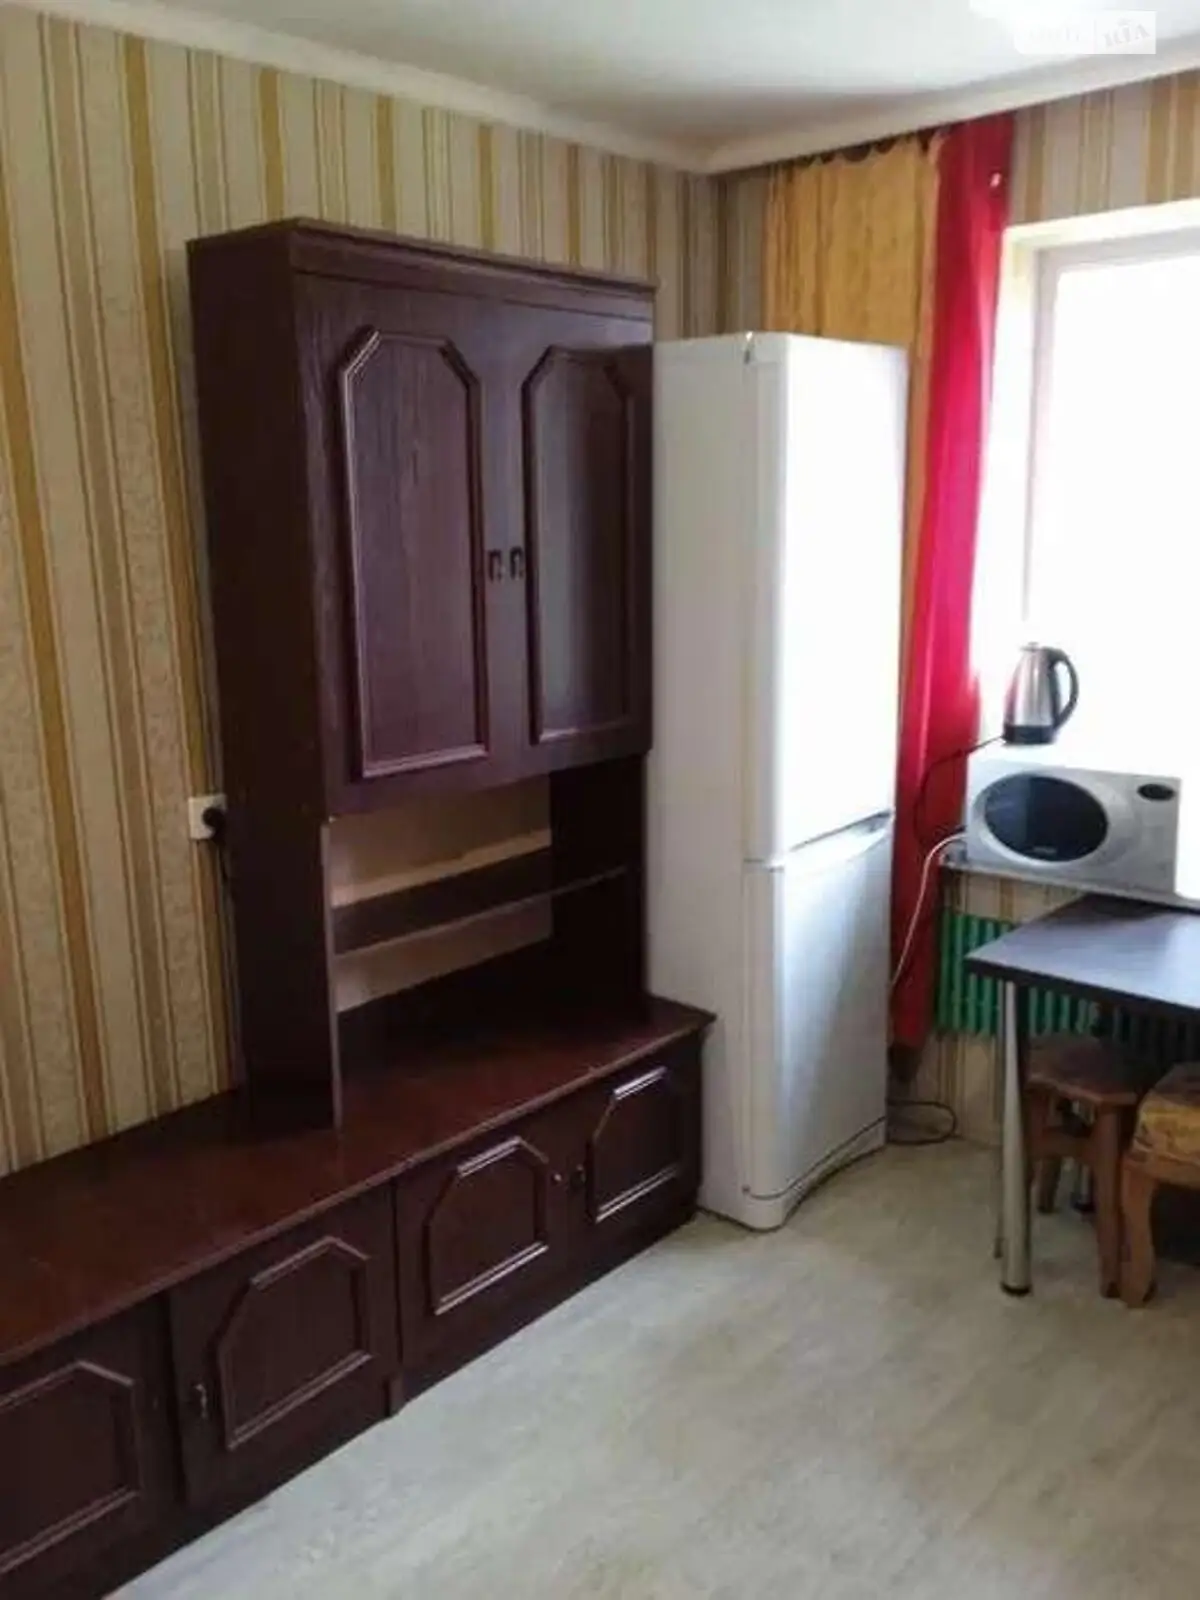 Продается комната 16 кв. м в Харькове - фото 2